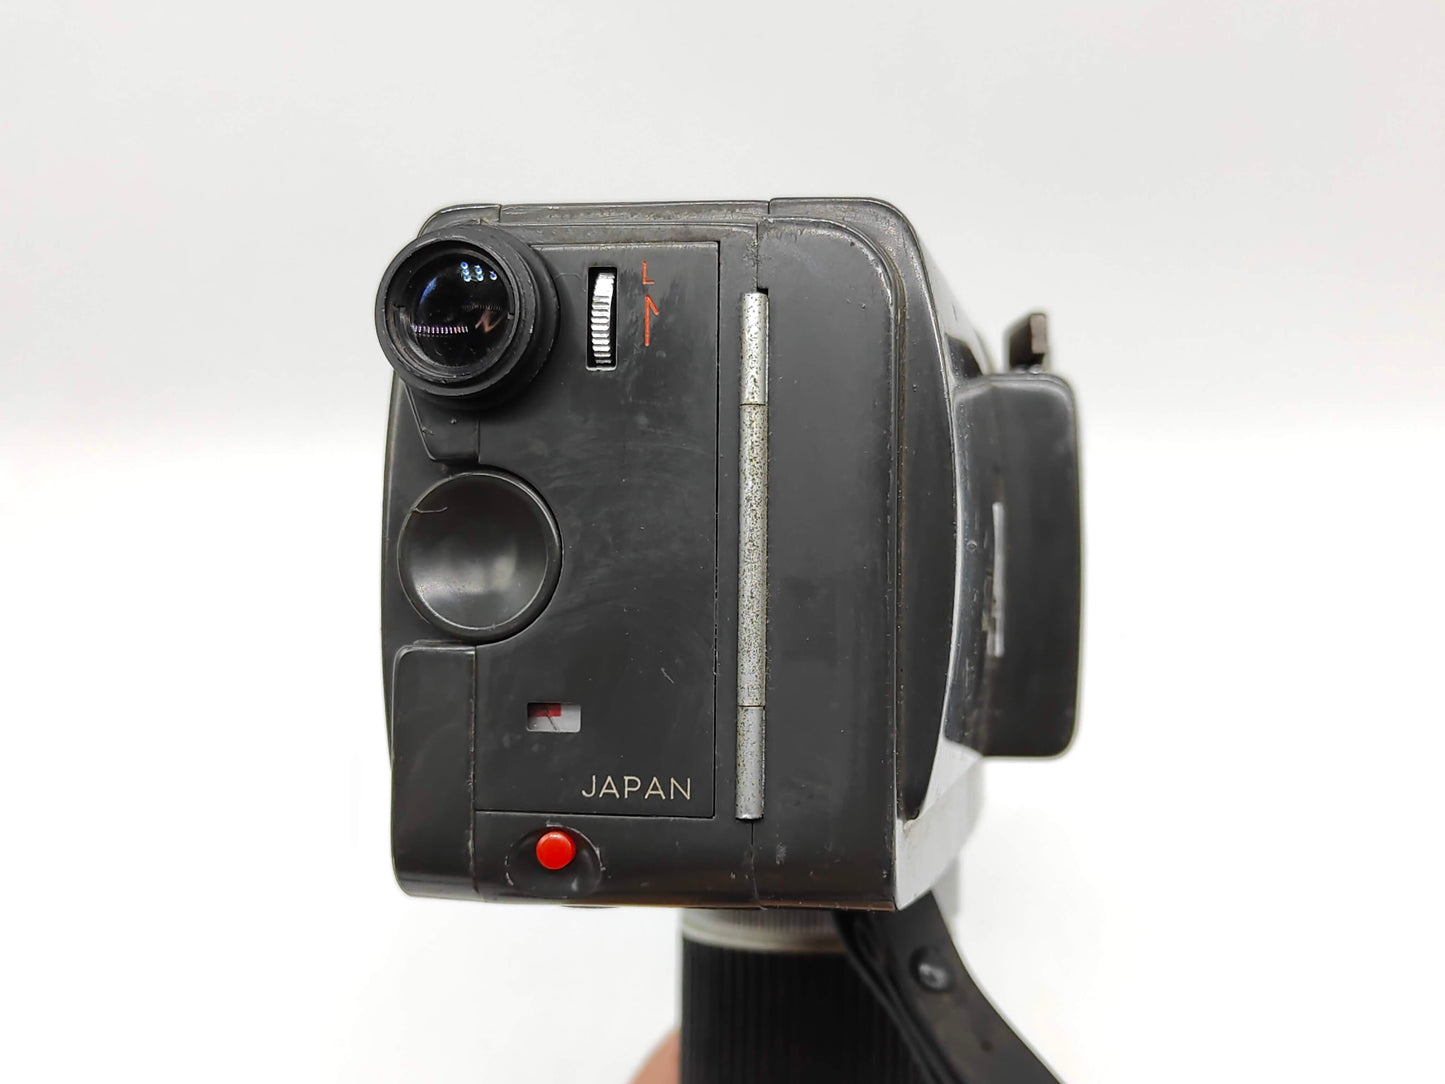 FILM TESTED Minolta Autopak-8 K7 Super-8 camera